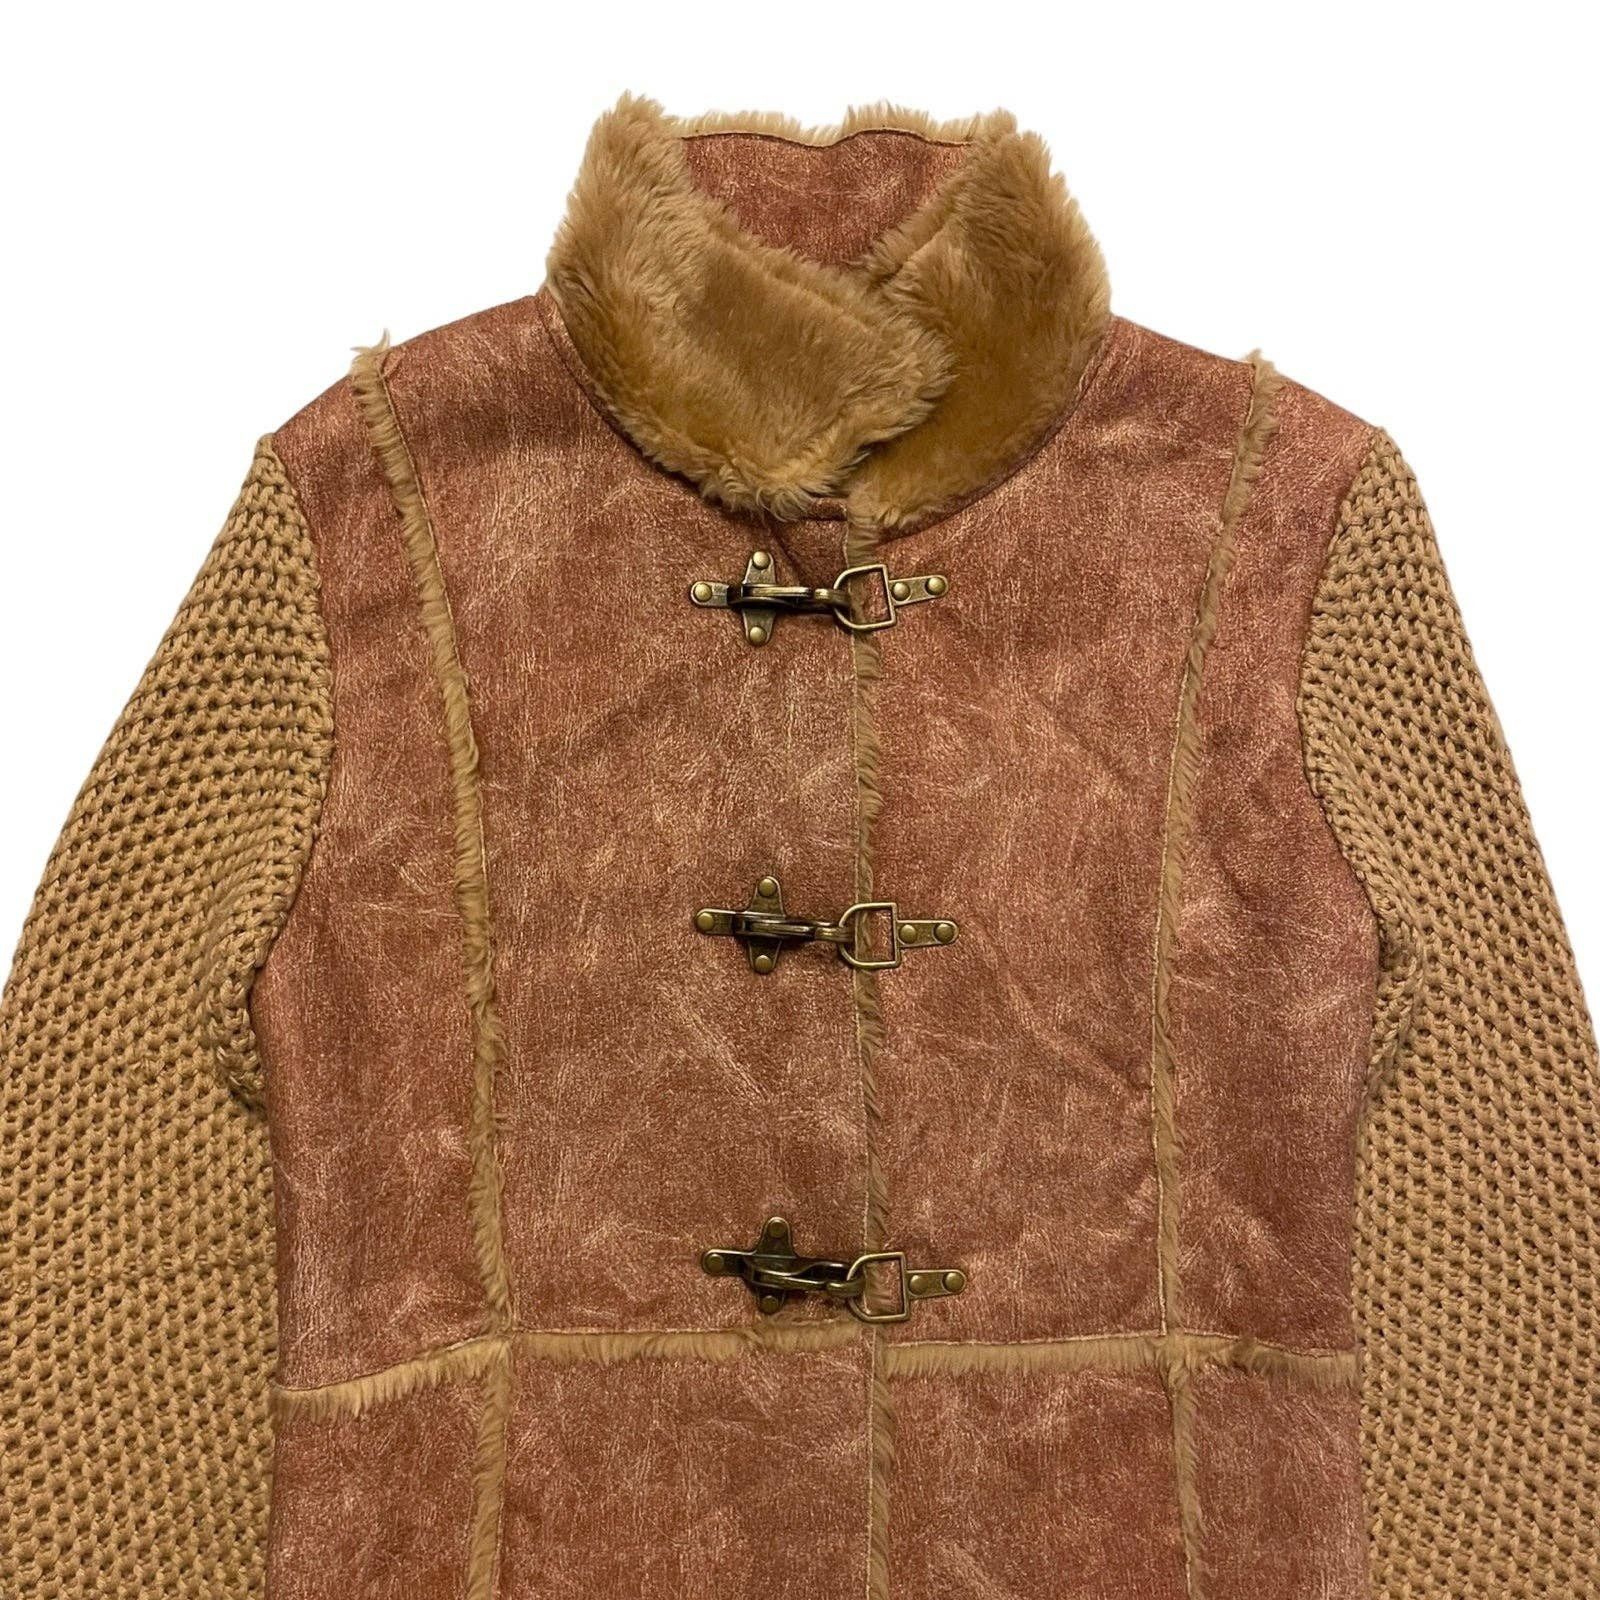 Vintage Vintage Y2K grunge faux shearling knit sweater jacket Size L Size L / US 10 / IT 46 - 4 Thumbnail